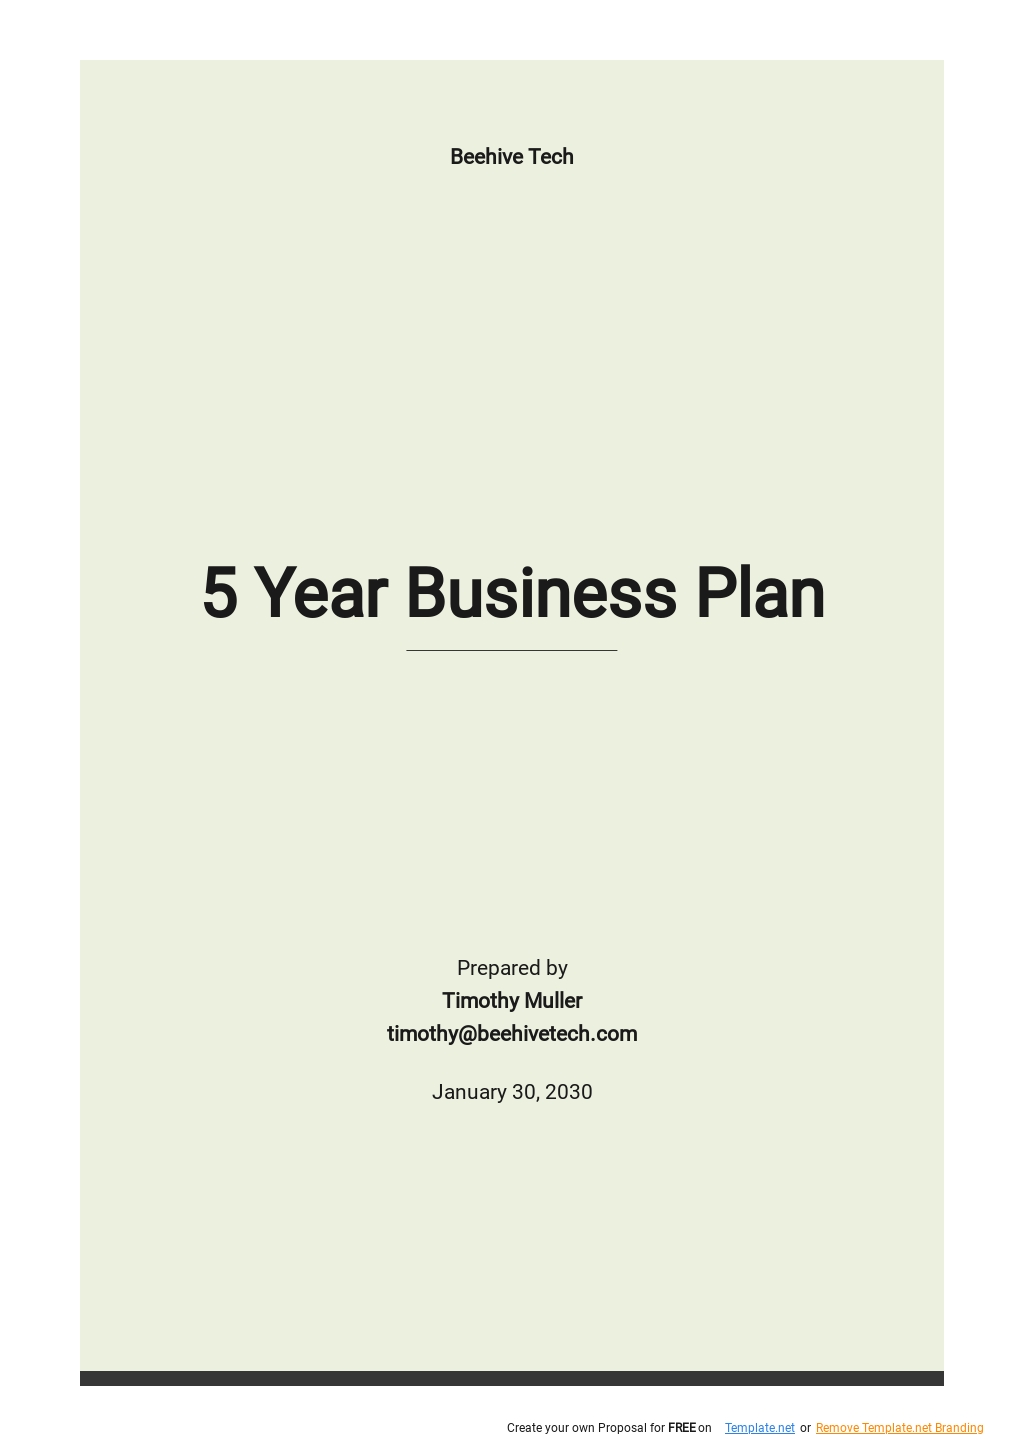 5 Year Business Plan Template.jpe